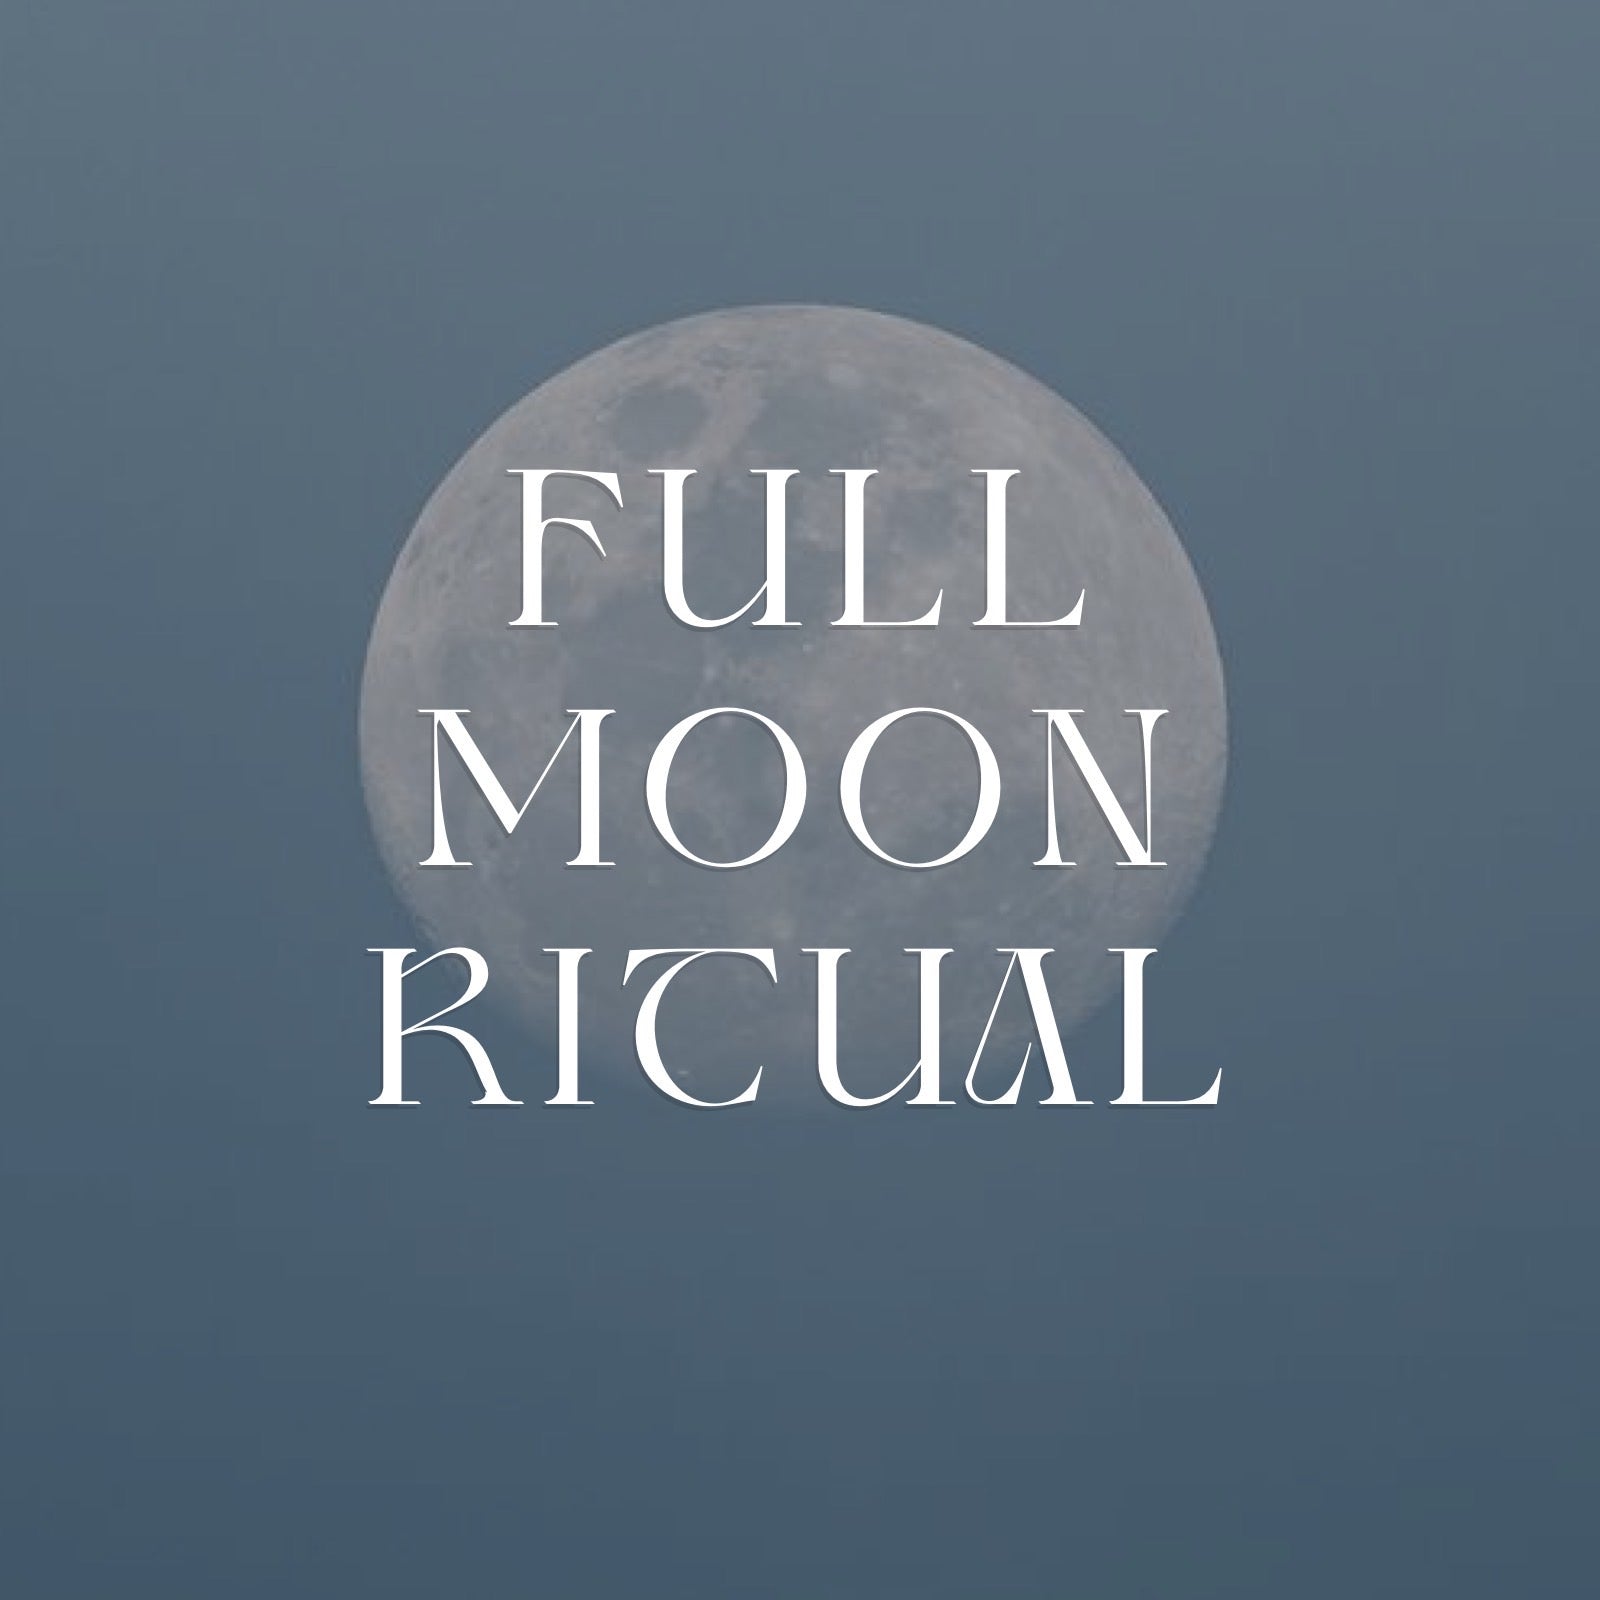 5 Full Moon Ritual Ideas